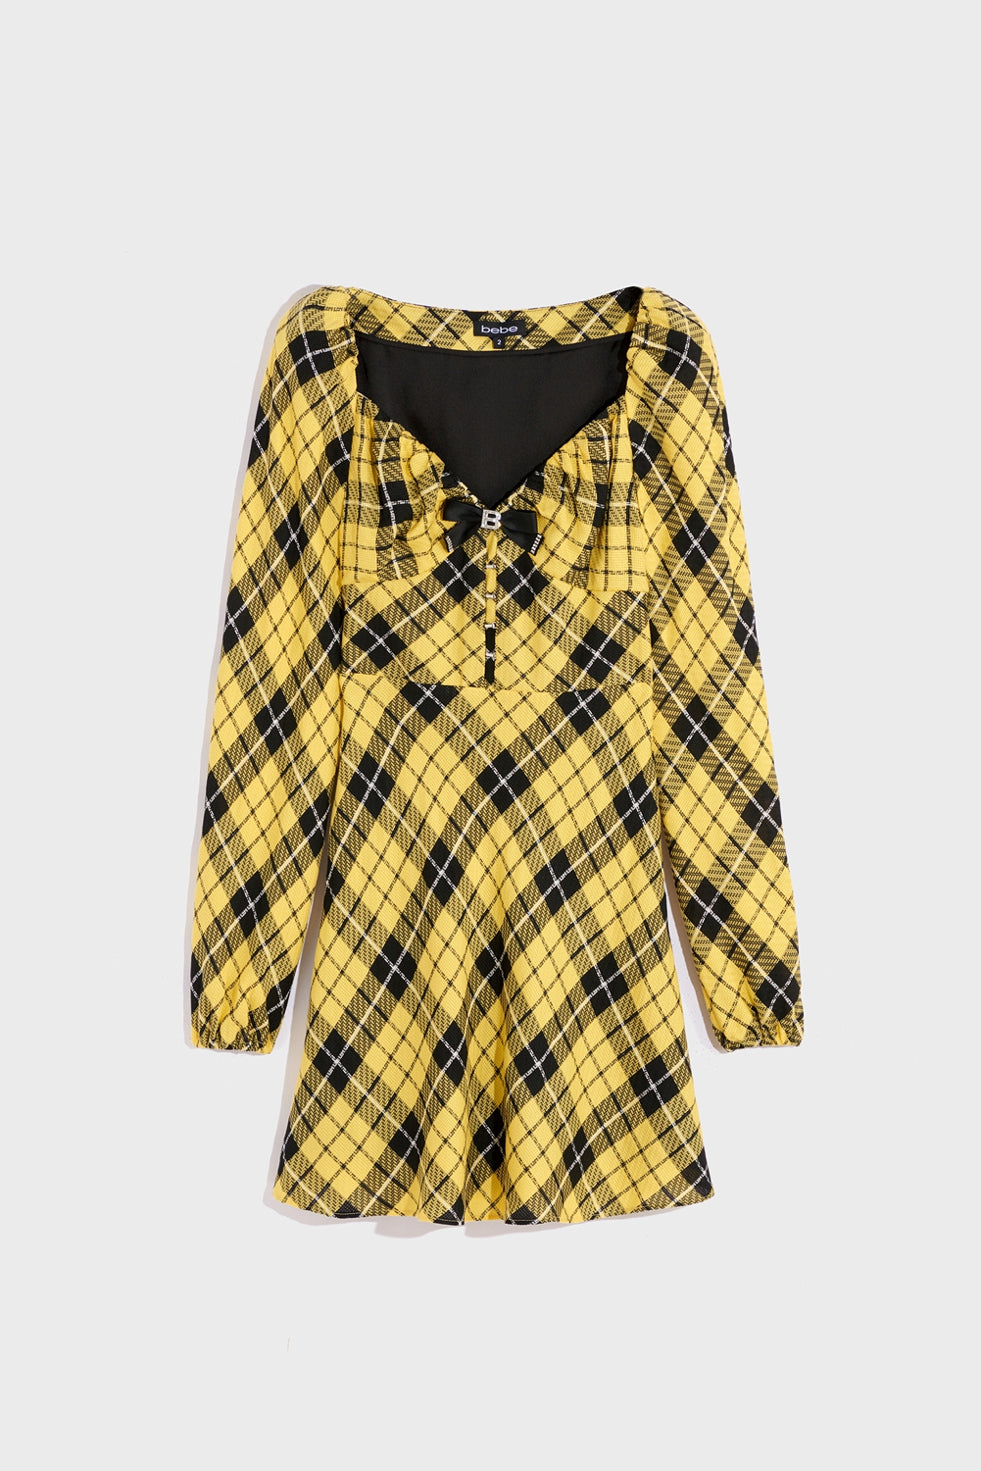 Black And Yellow Long Sleeve Checkered Short Dress